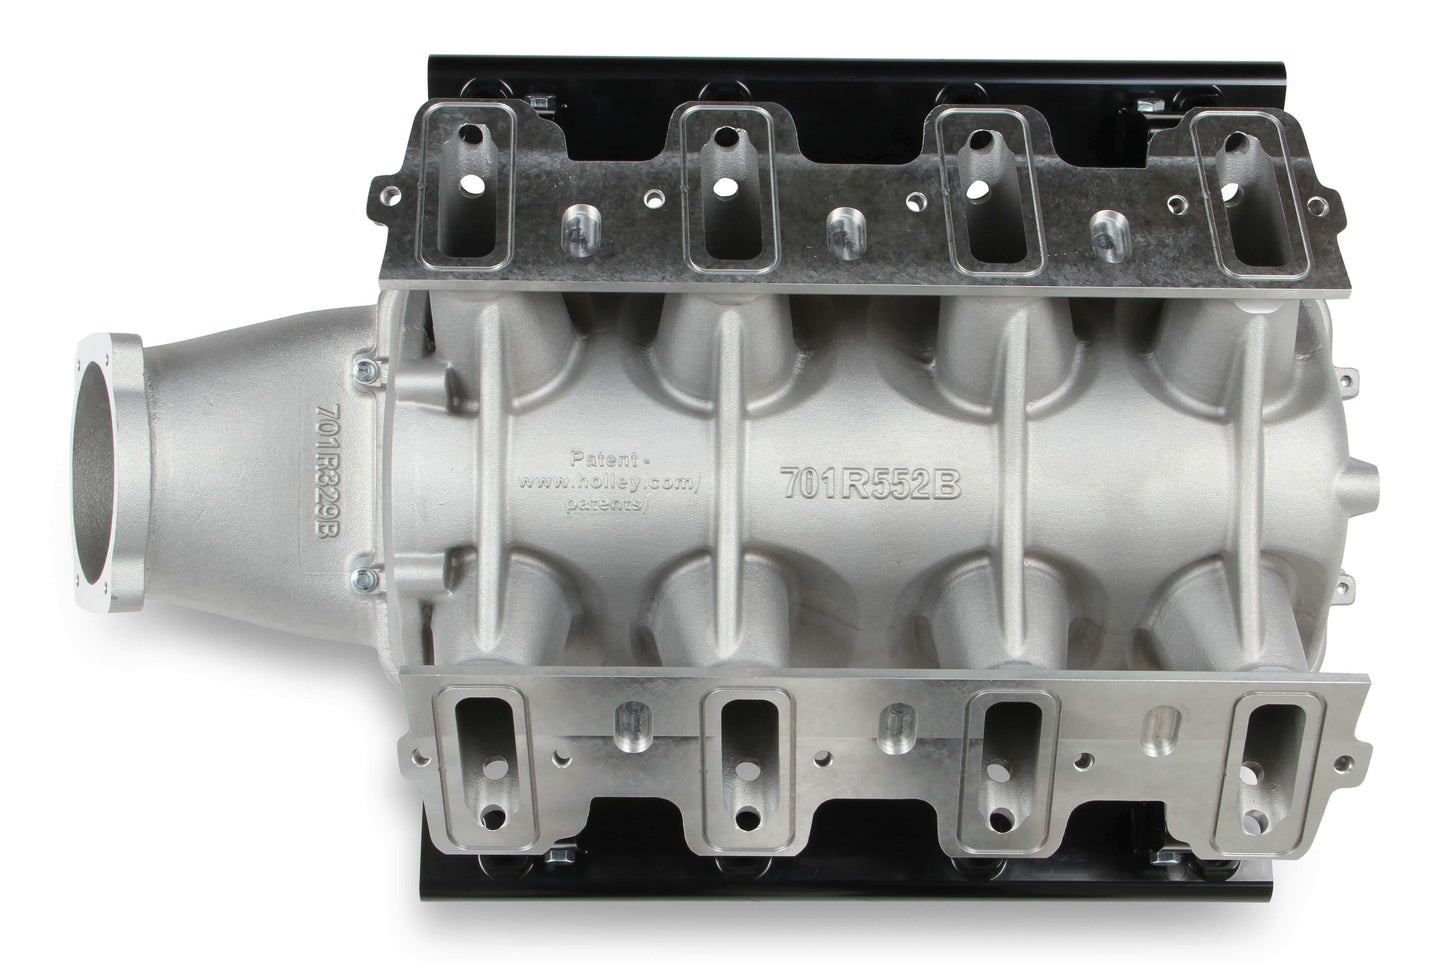 Dual Fuel Injector LS1 Lo-Ram Top-Feed EFI Intake Manifold Kit - 300-624